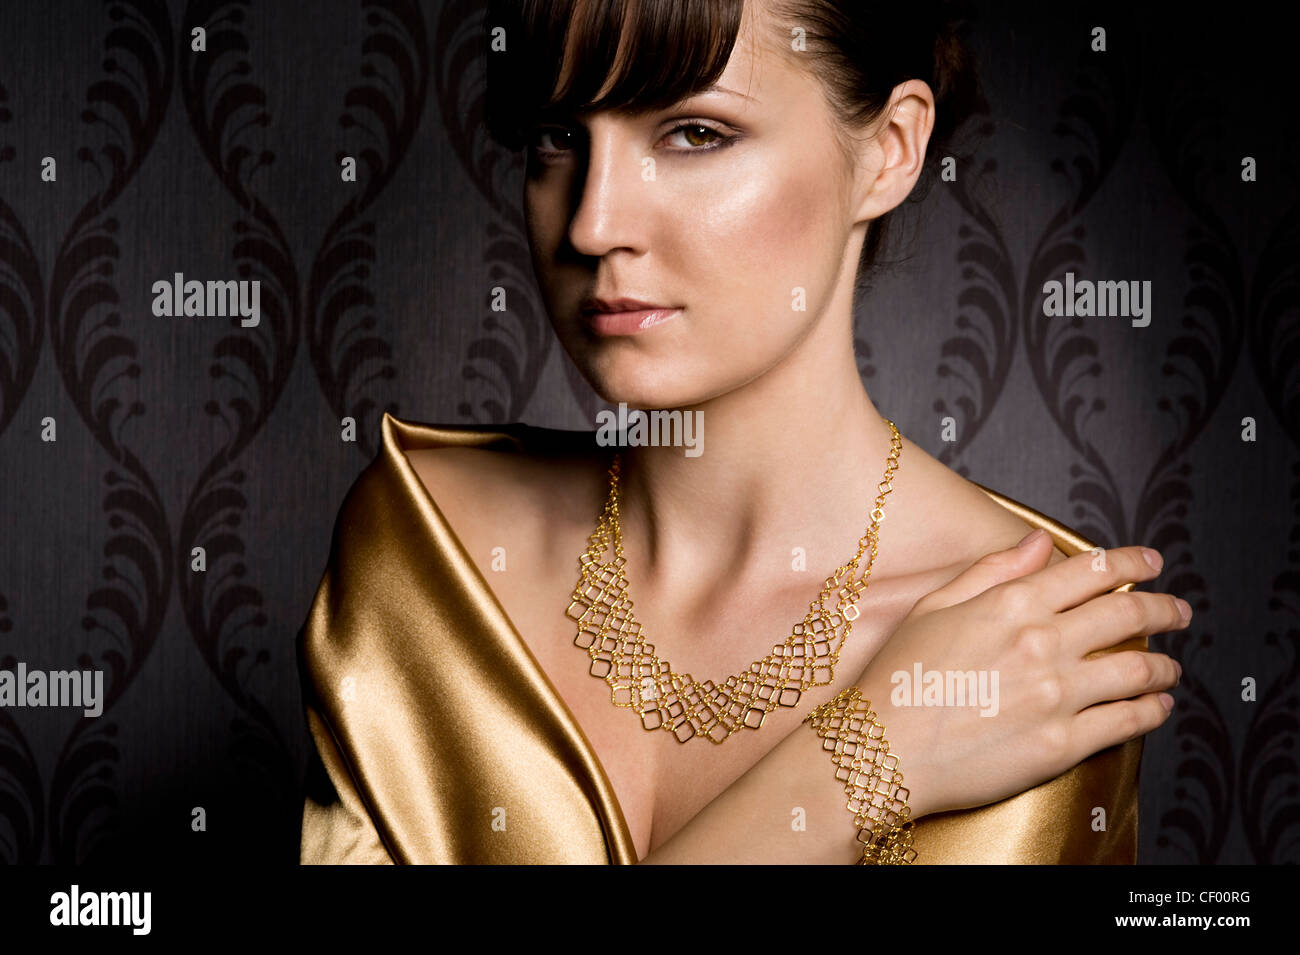 portrait of elegant woman wearing golden necklace and bracelet, over wallpaper background Stock Photo